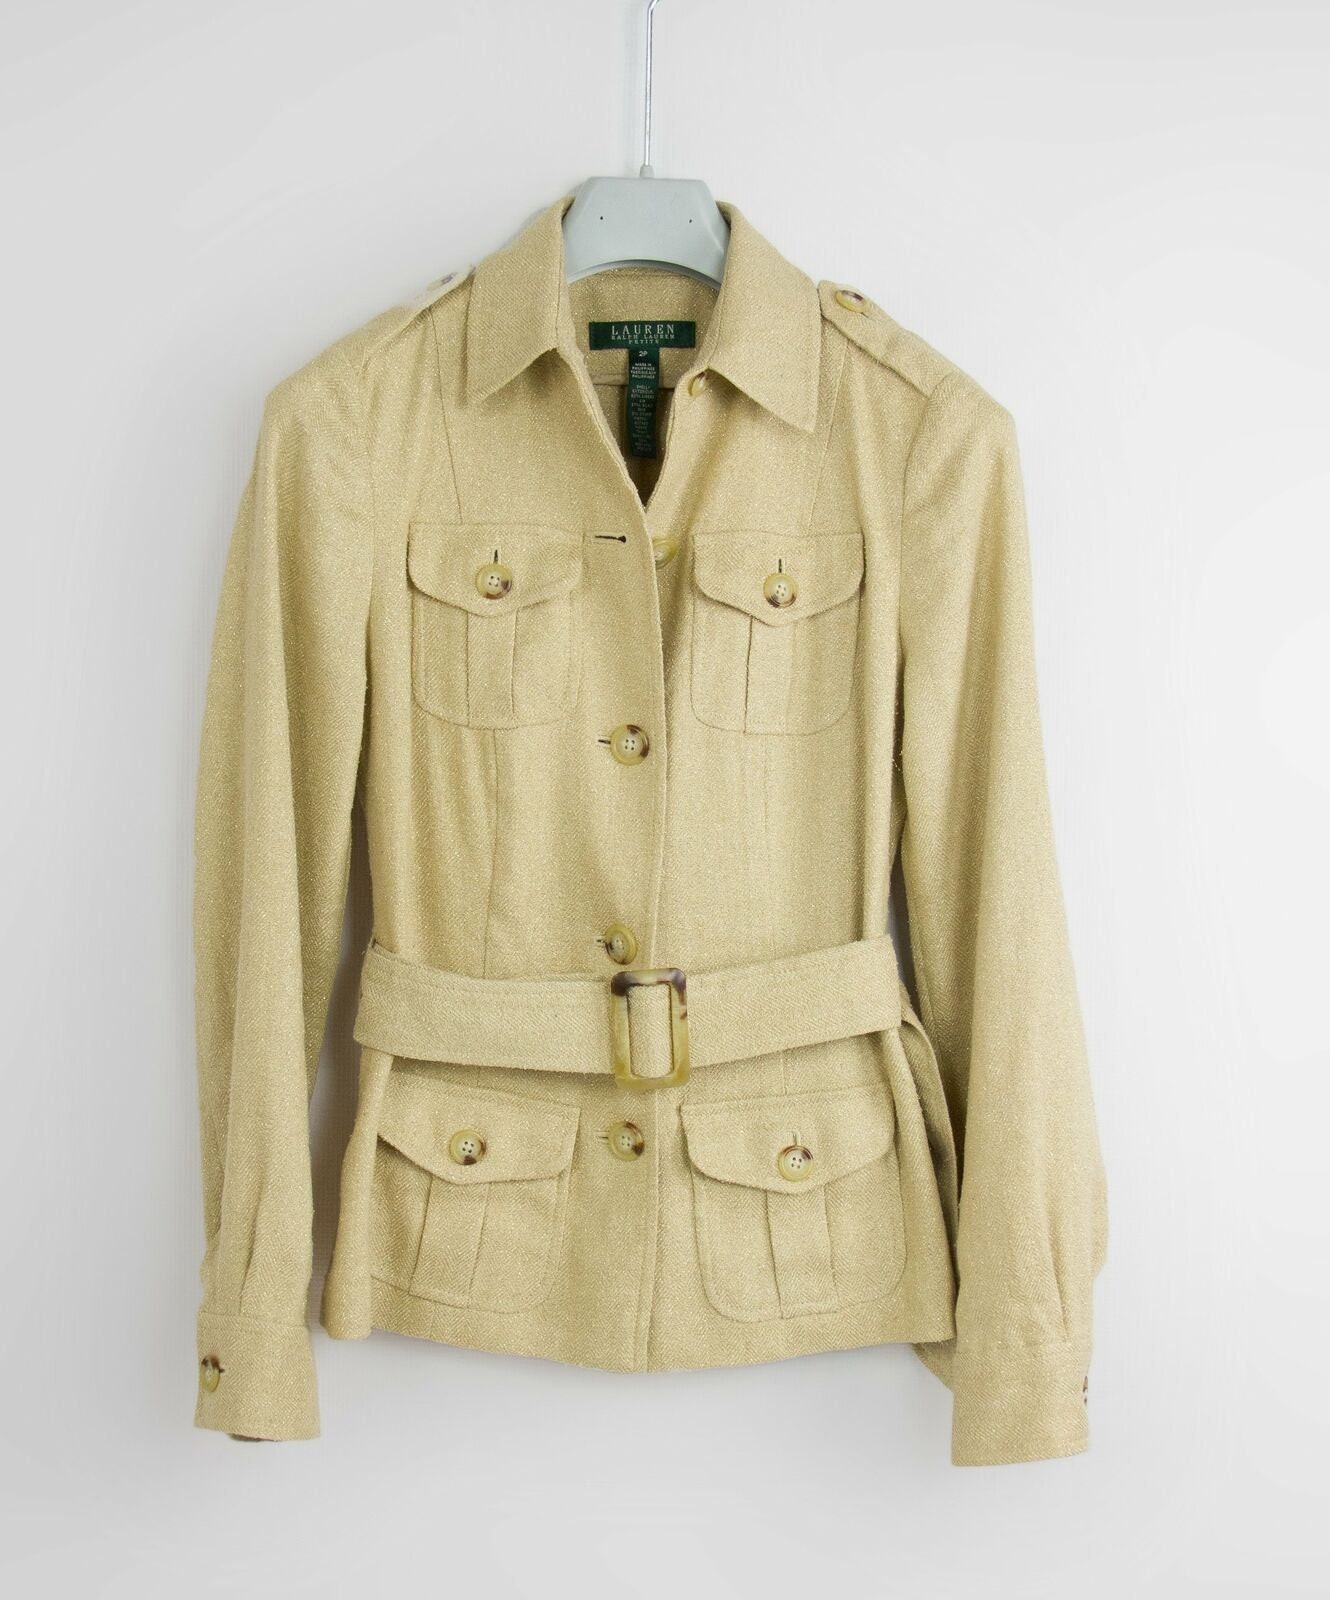 Ralph Lauren Metallic Silk & Linen Blend Safari Style Jacket, Size 2P